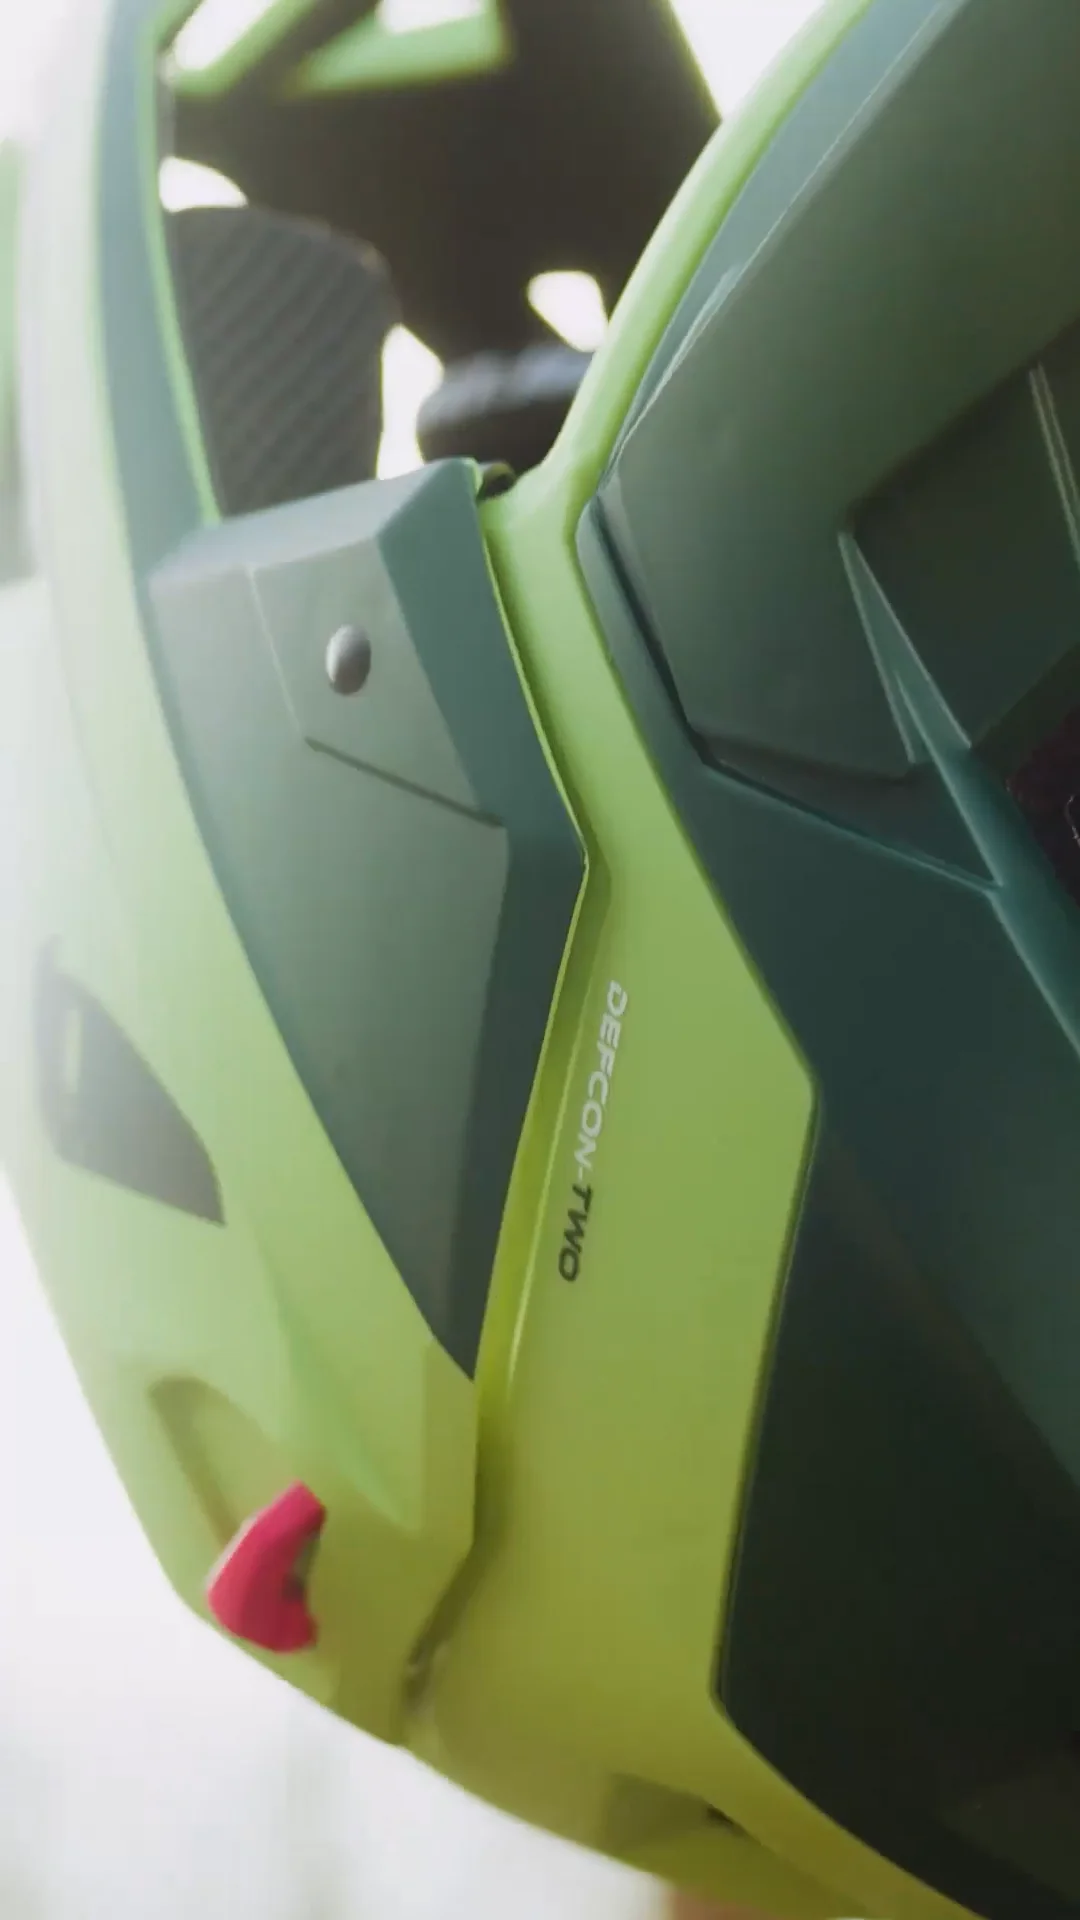 Mtb Defcon two helmet green - Ufo Plast